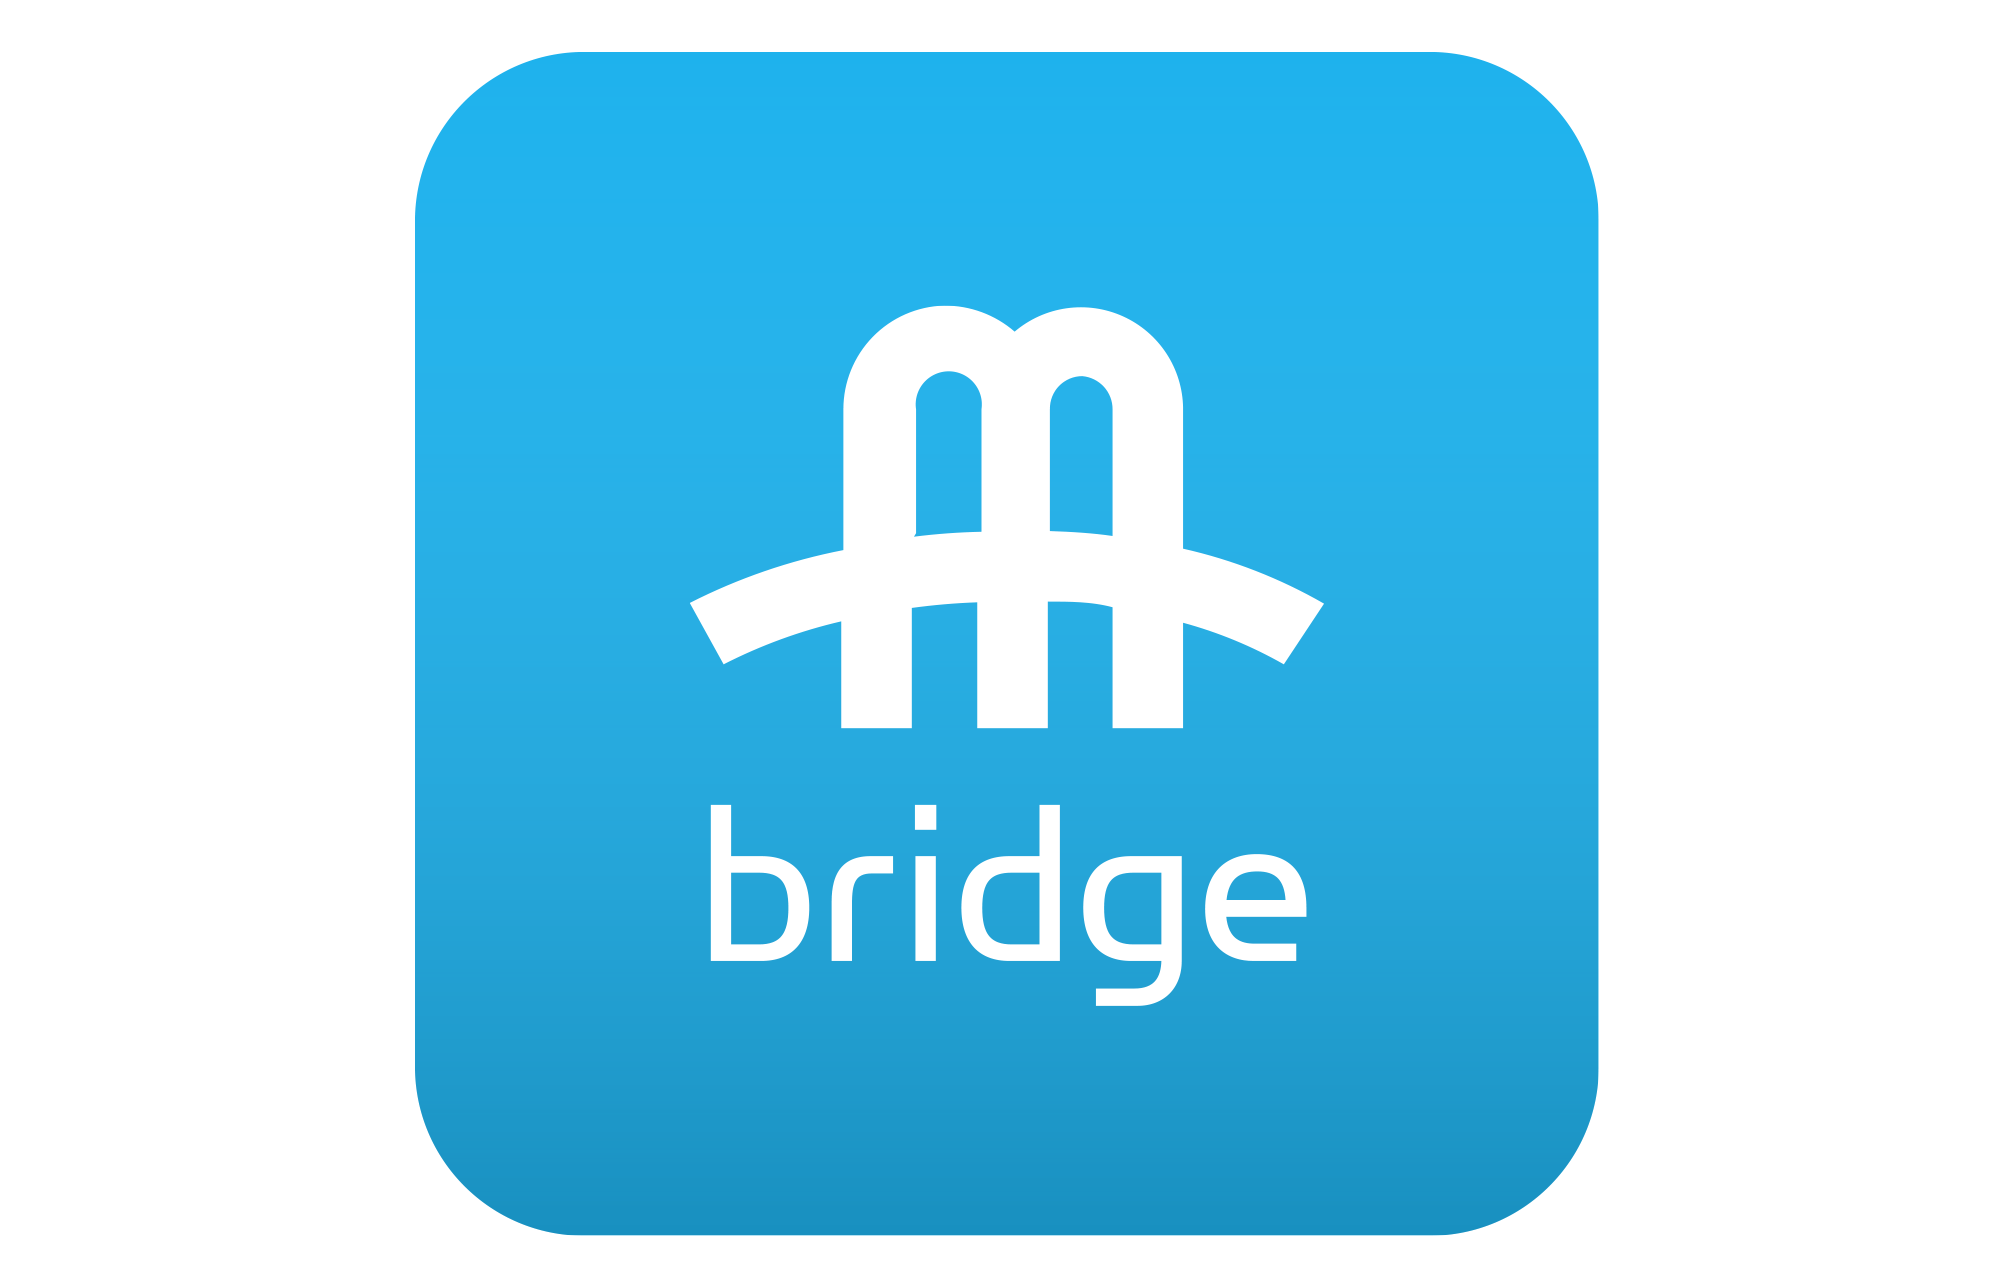 Blue Bridge UI logo.